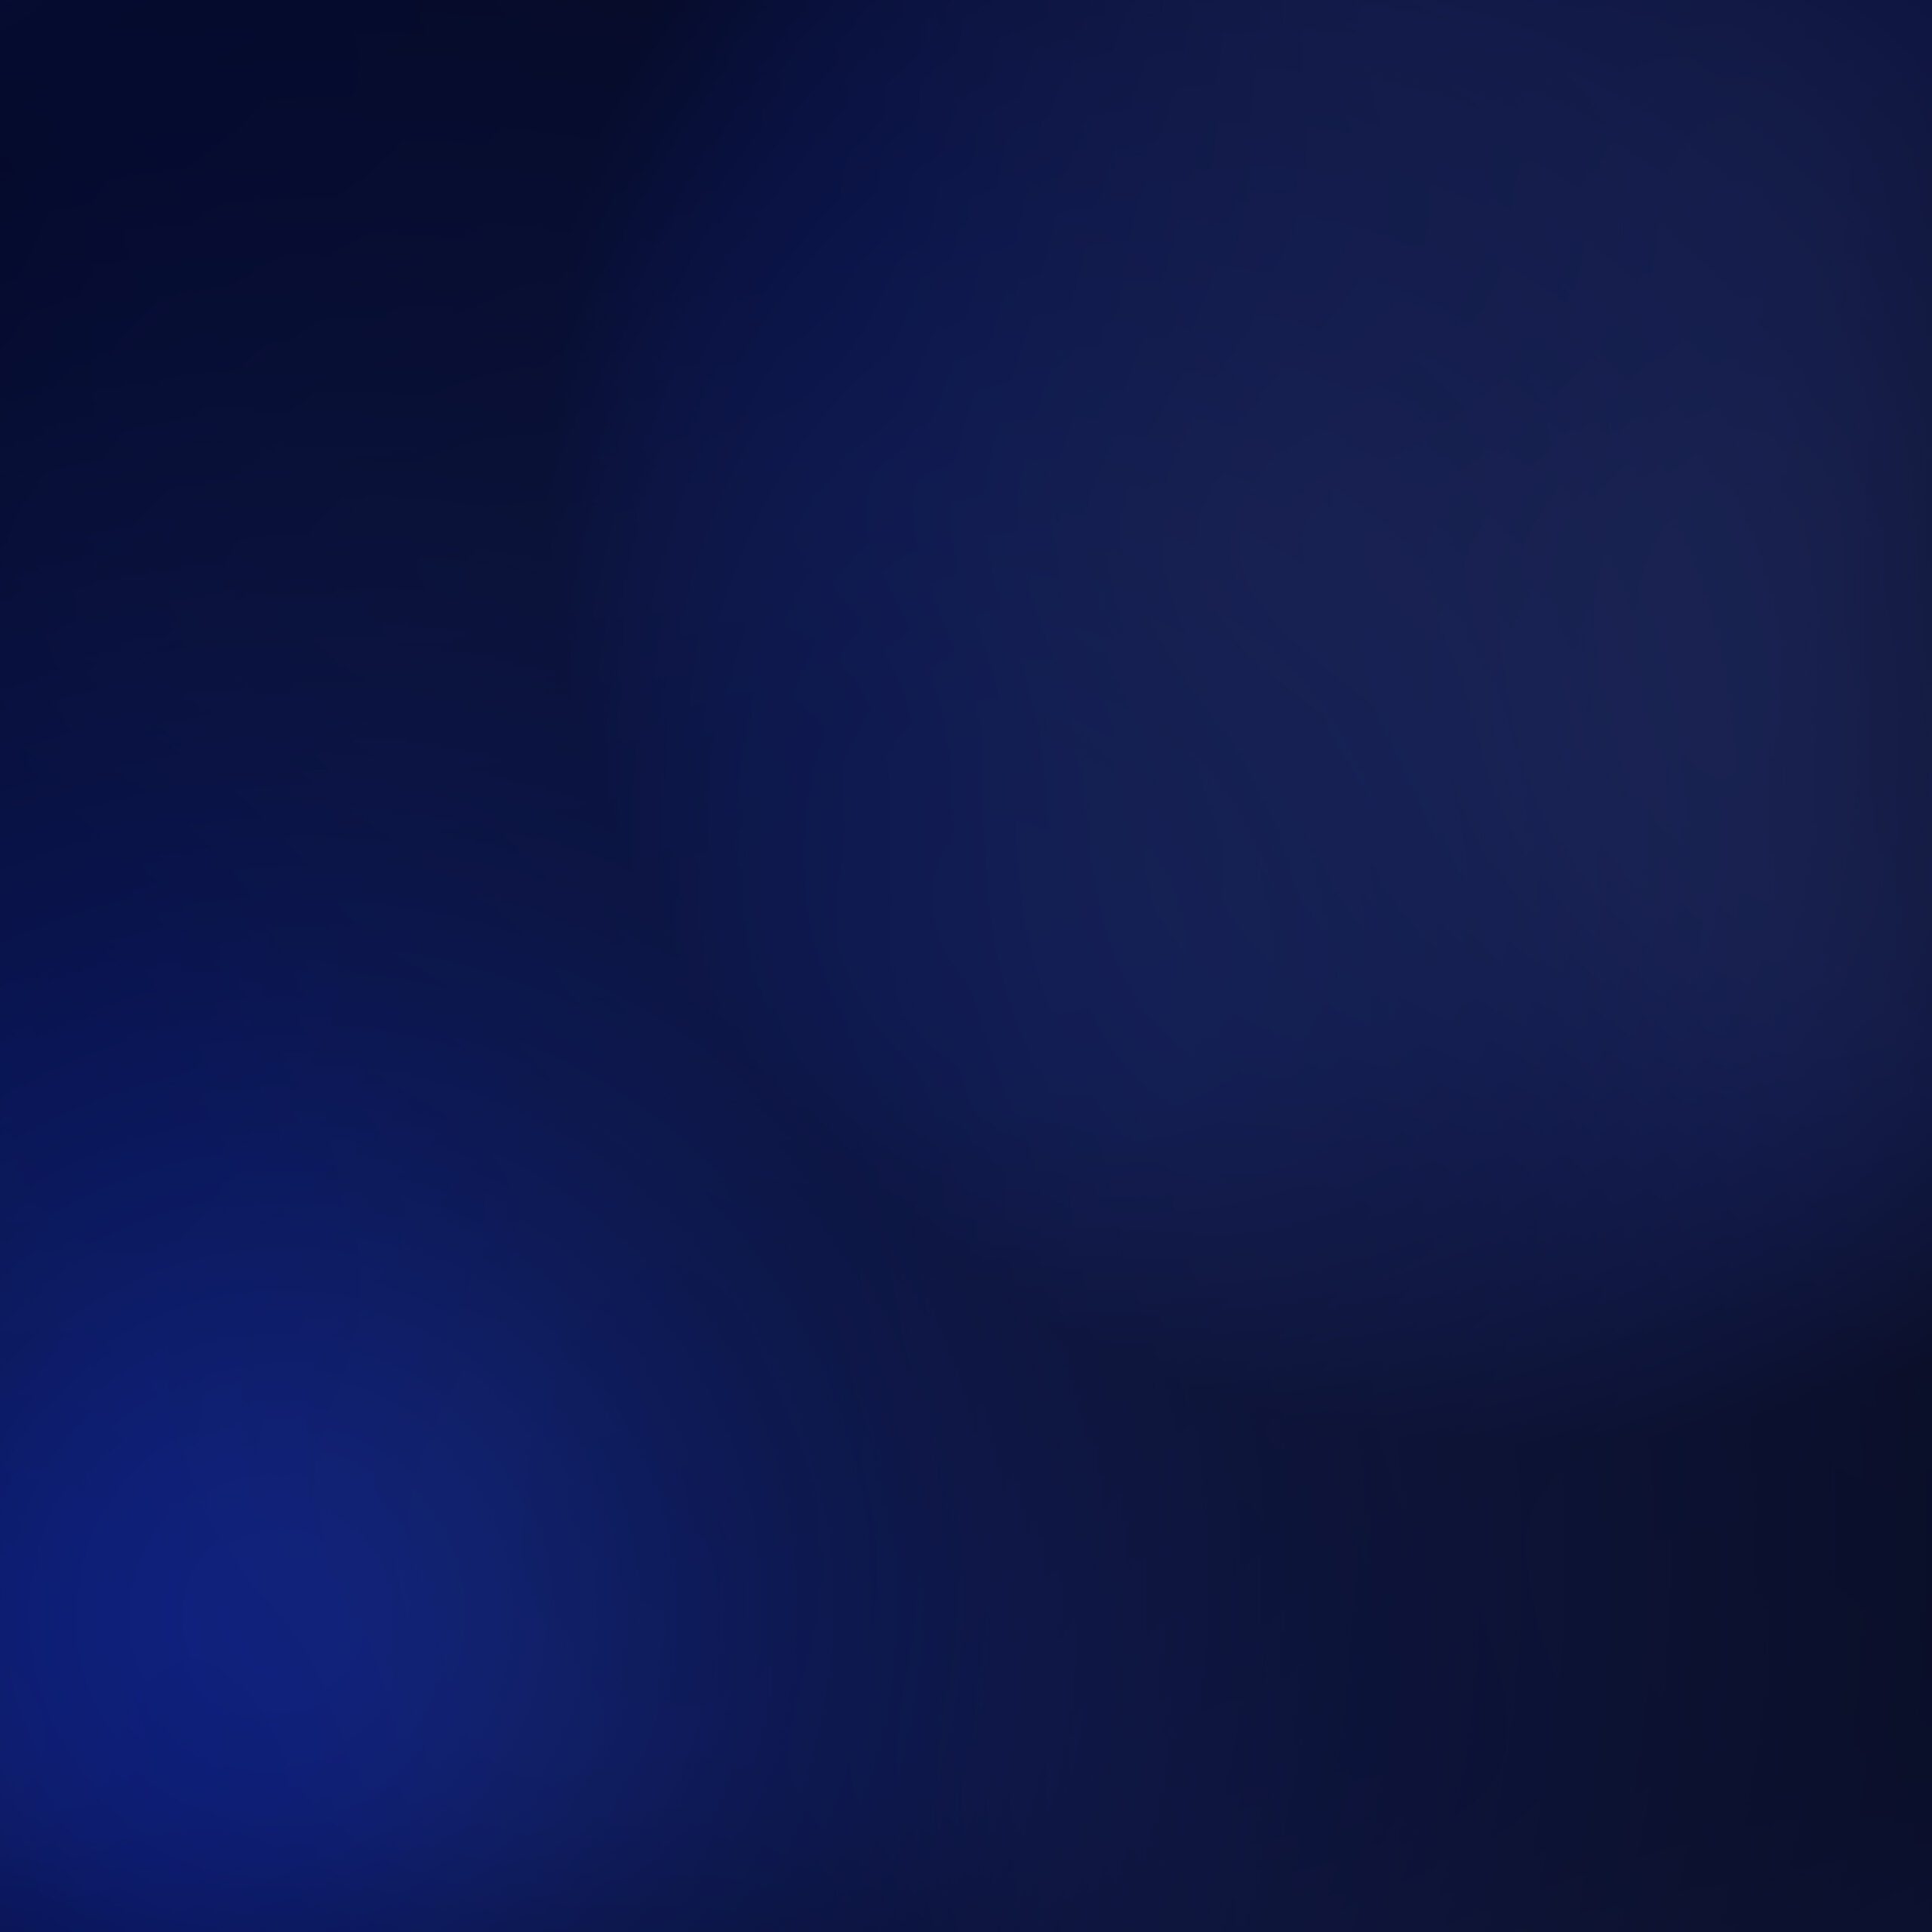 Abstract blue light background hvhez0ko2ge scaled